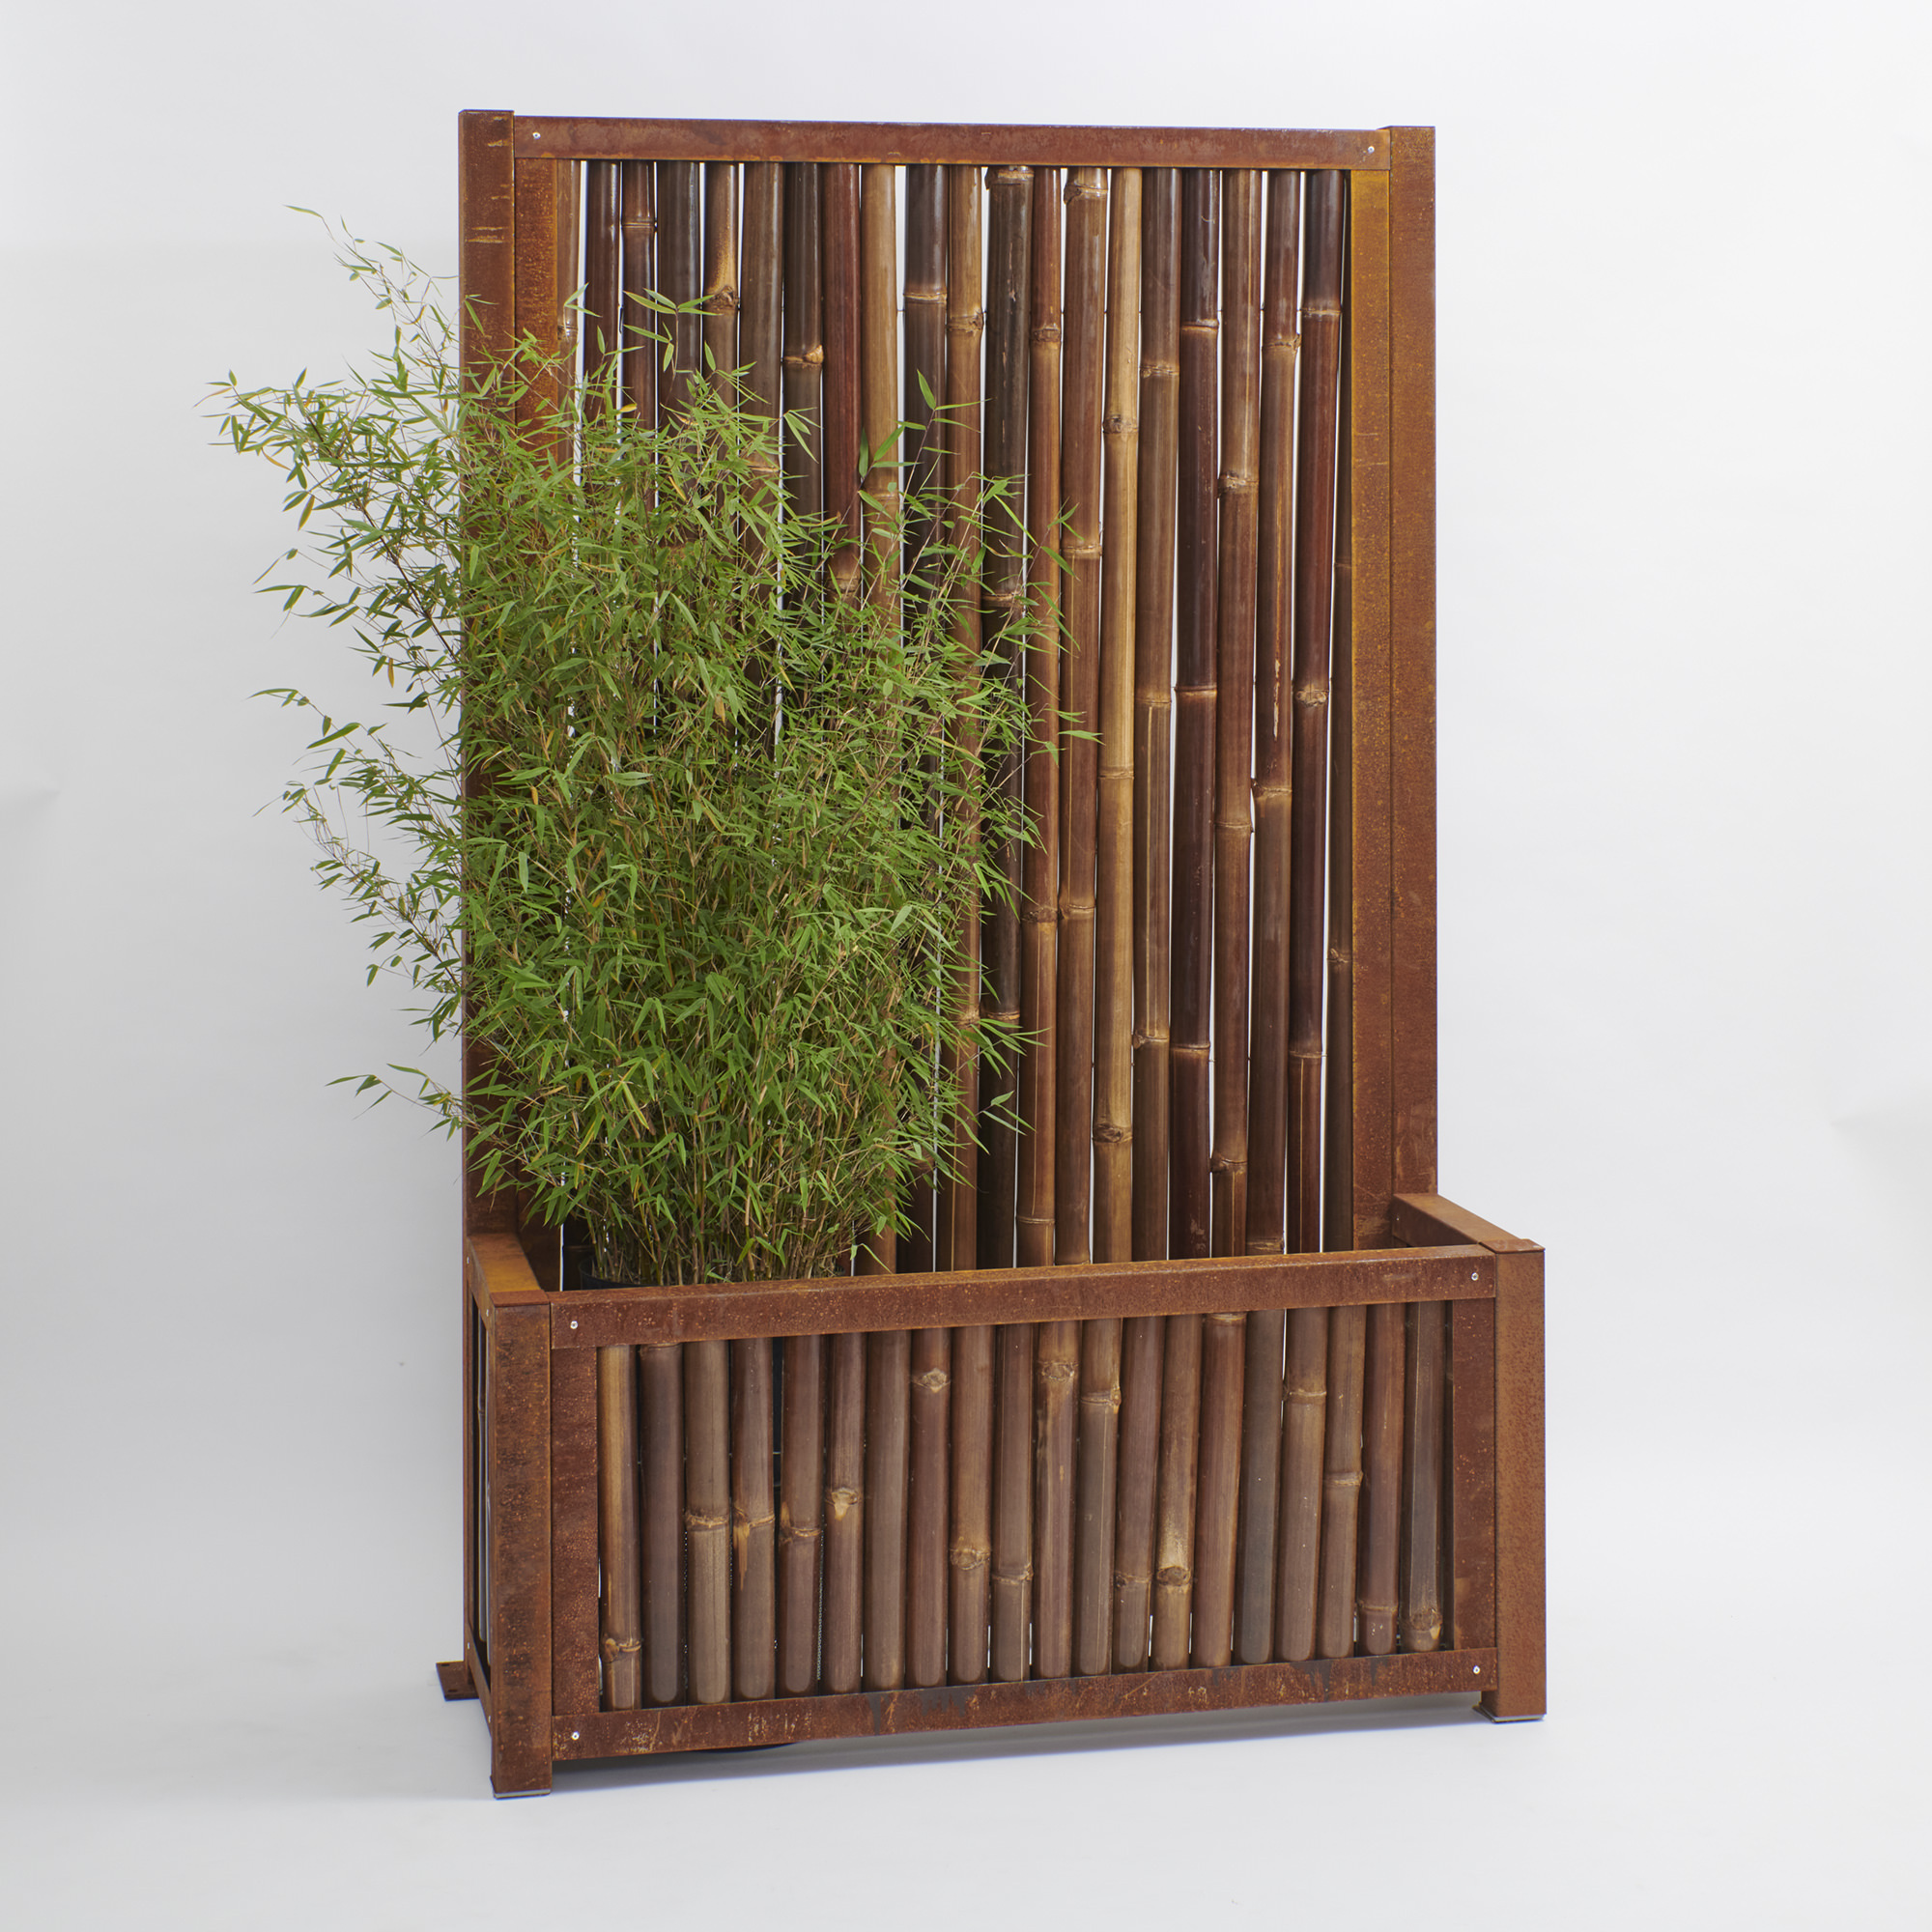 Bambus Pflanzgefäss Corten mit Rückwand